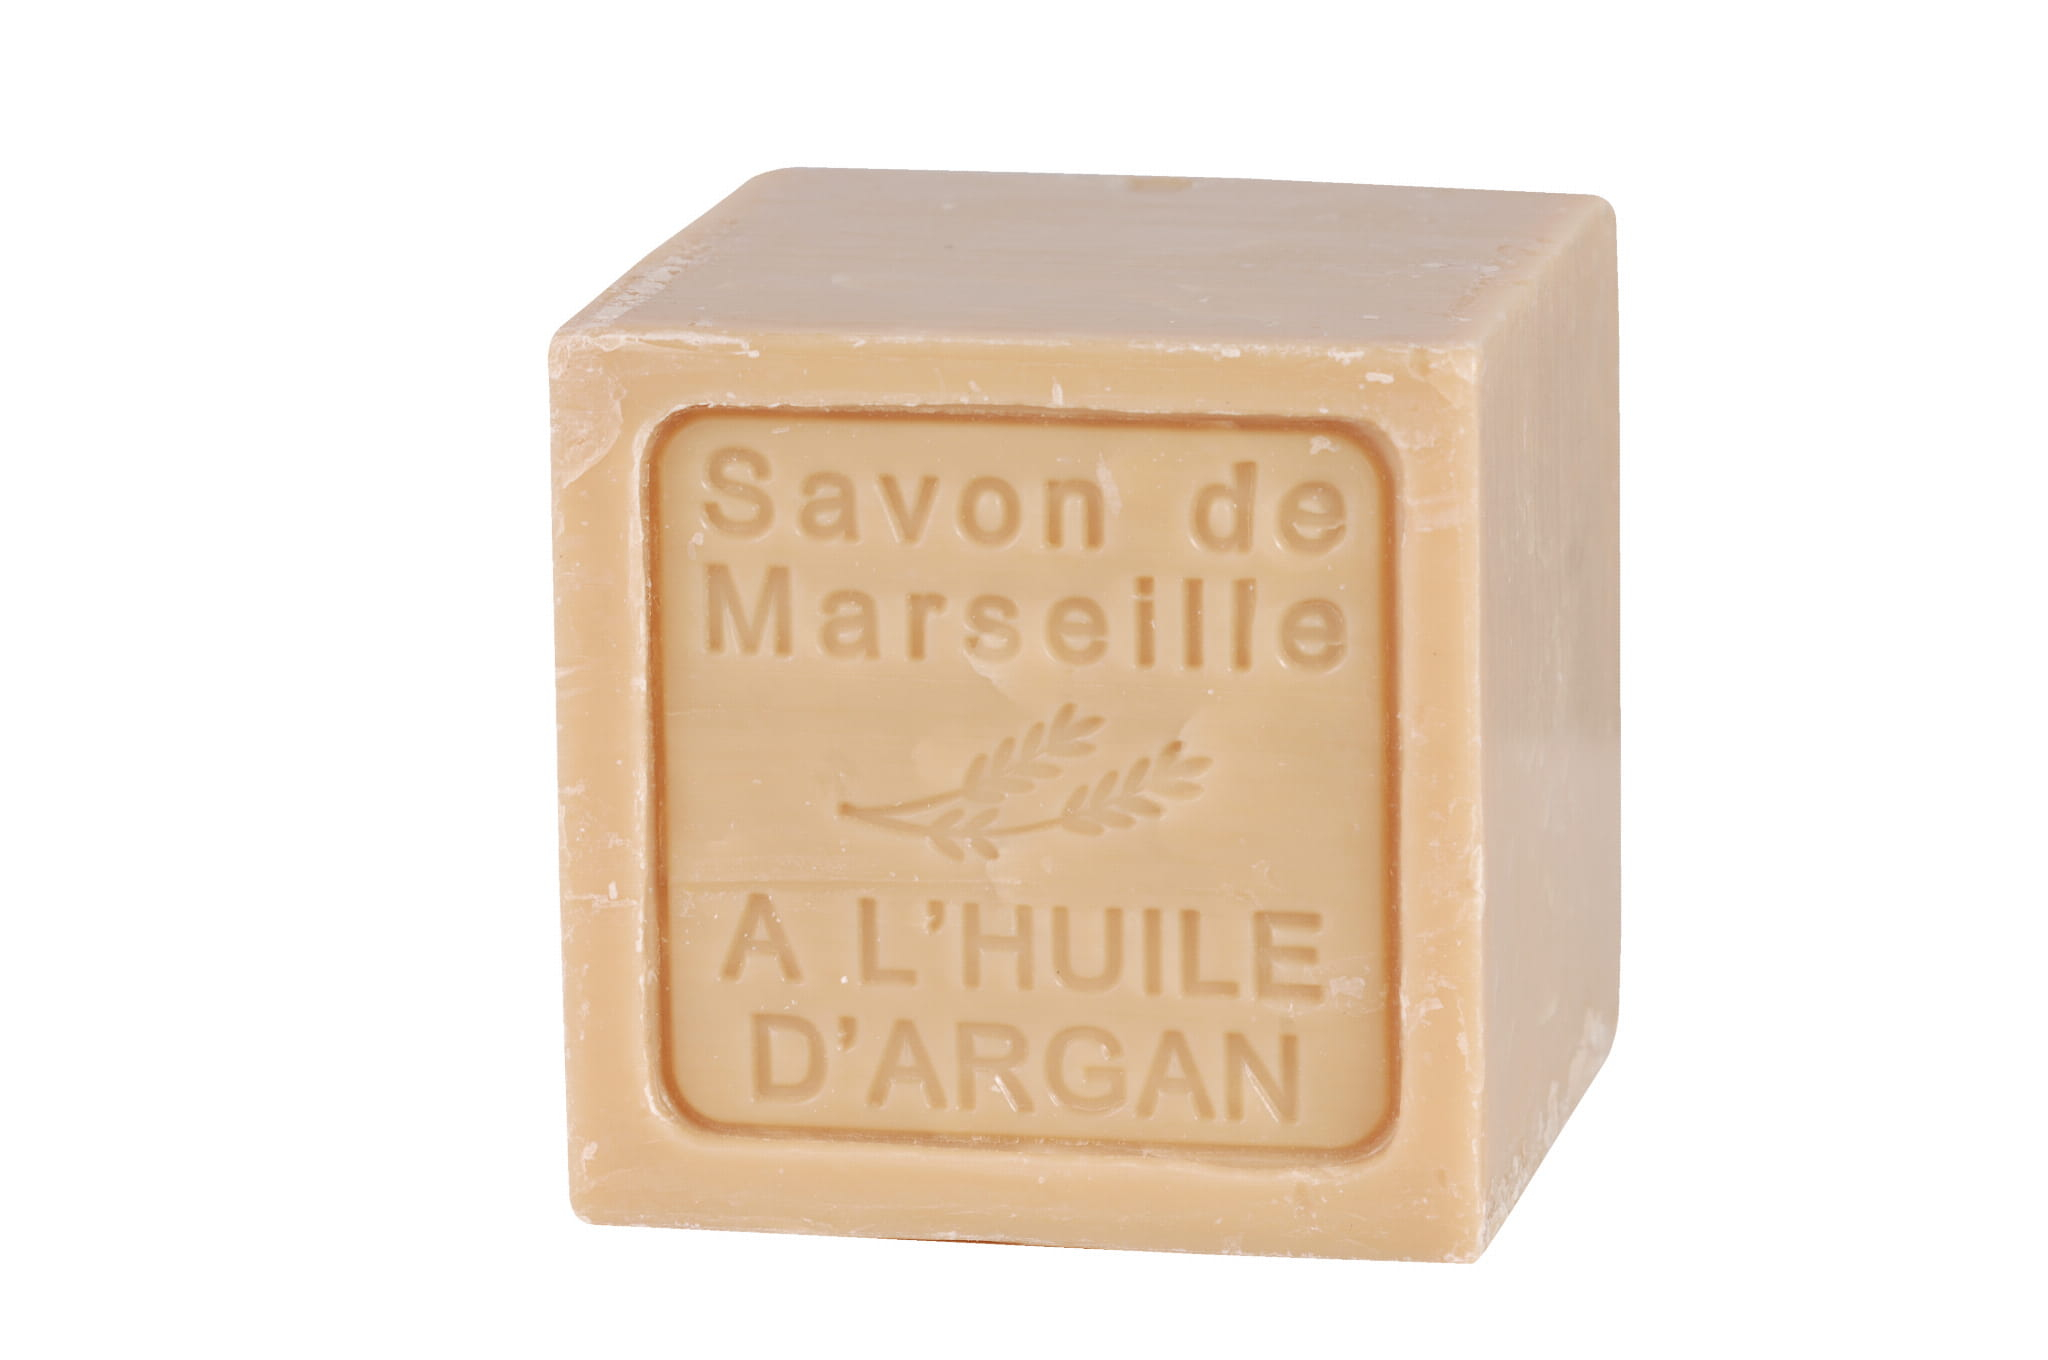 Marseille soap with Argan Le Chatelard 1802 300 g !!!